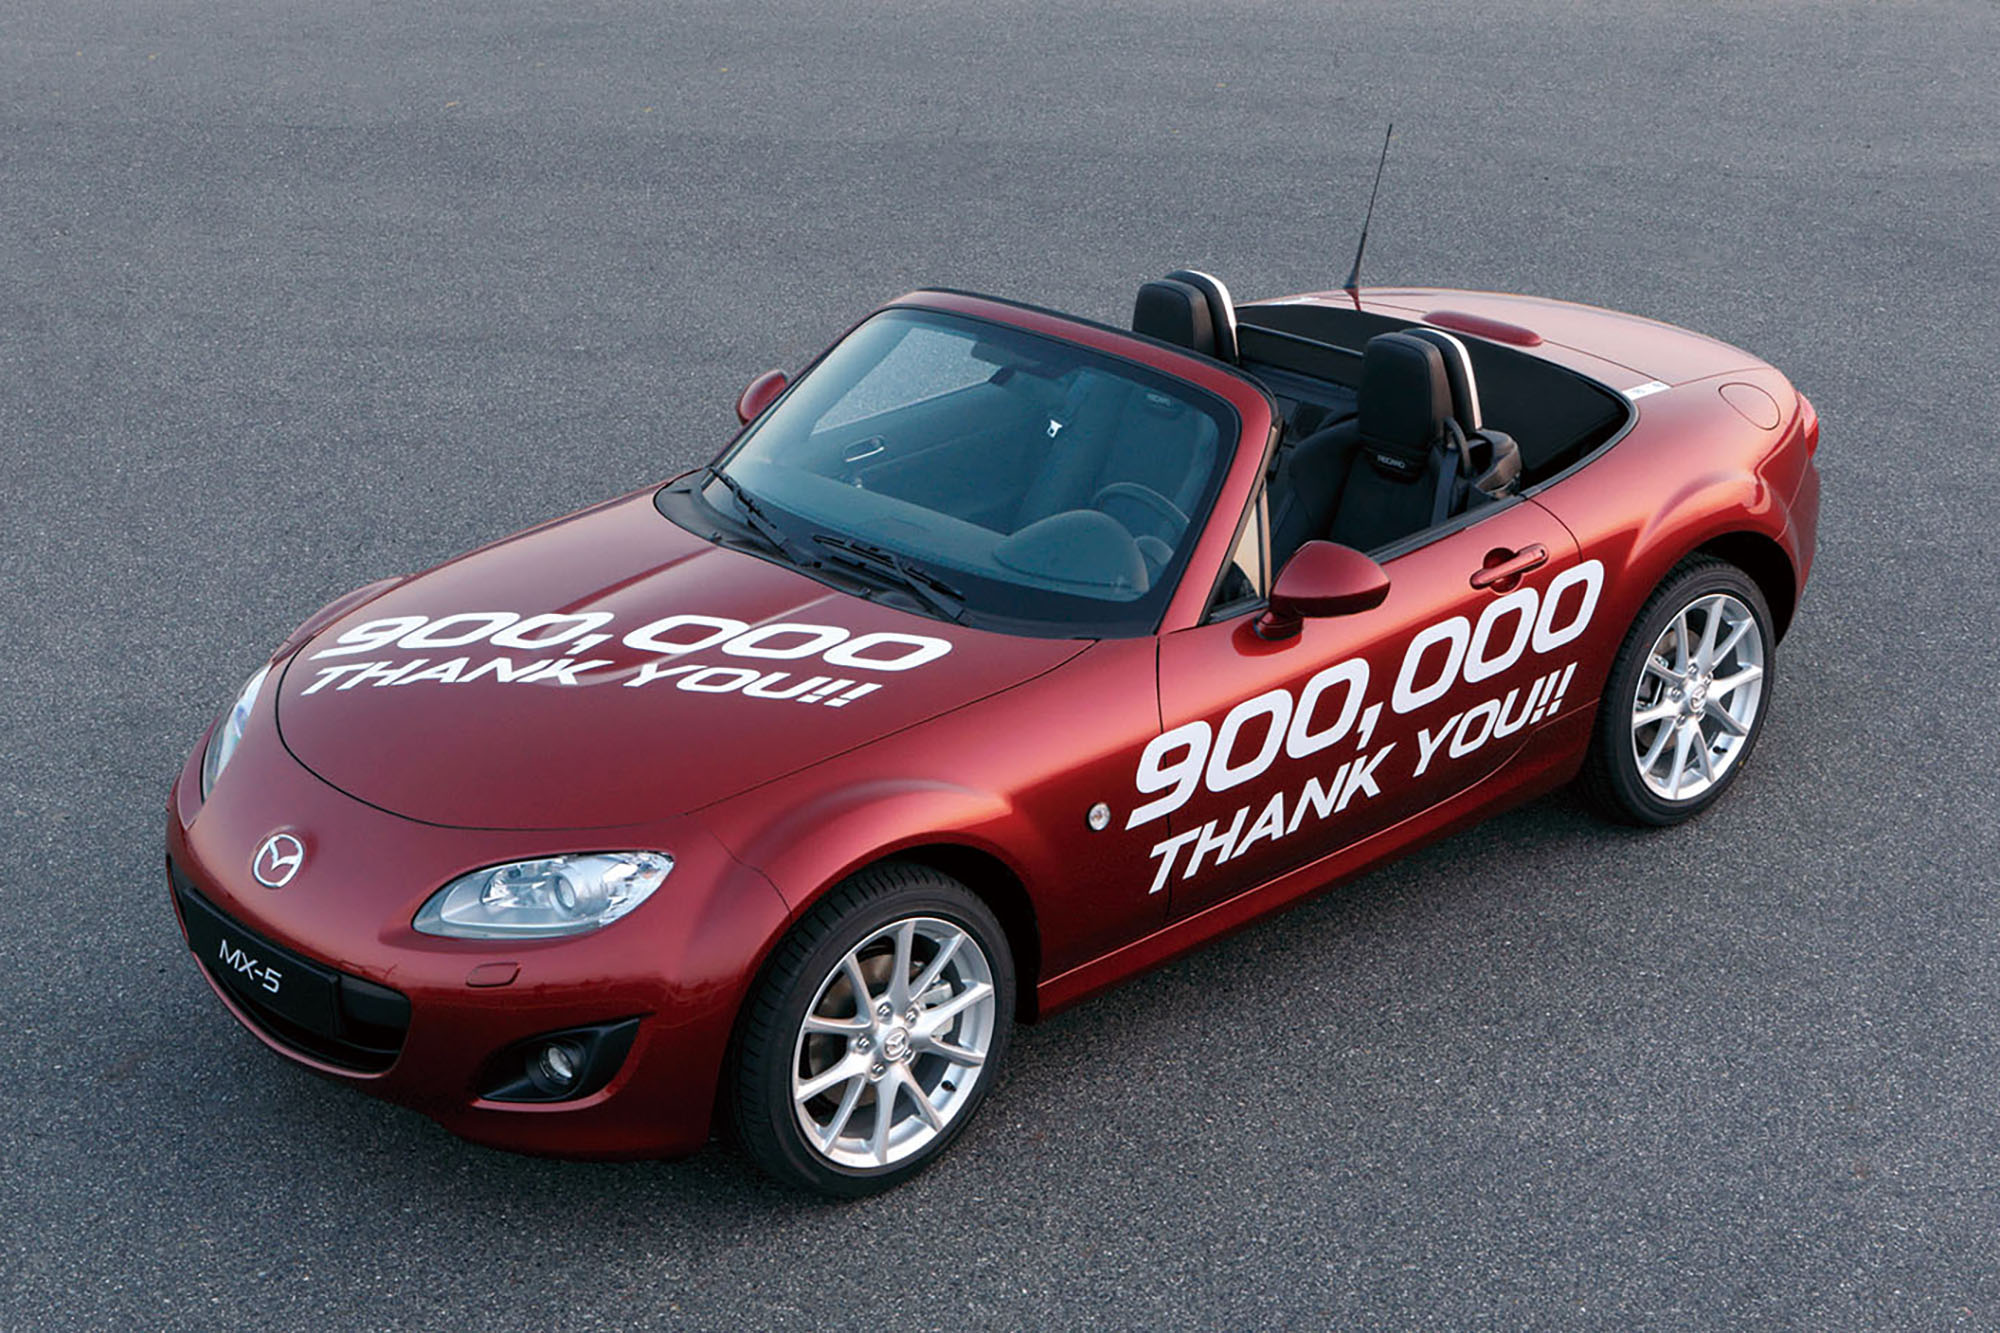 A Red Mazda Miata celebrating 900,000 units produced